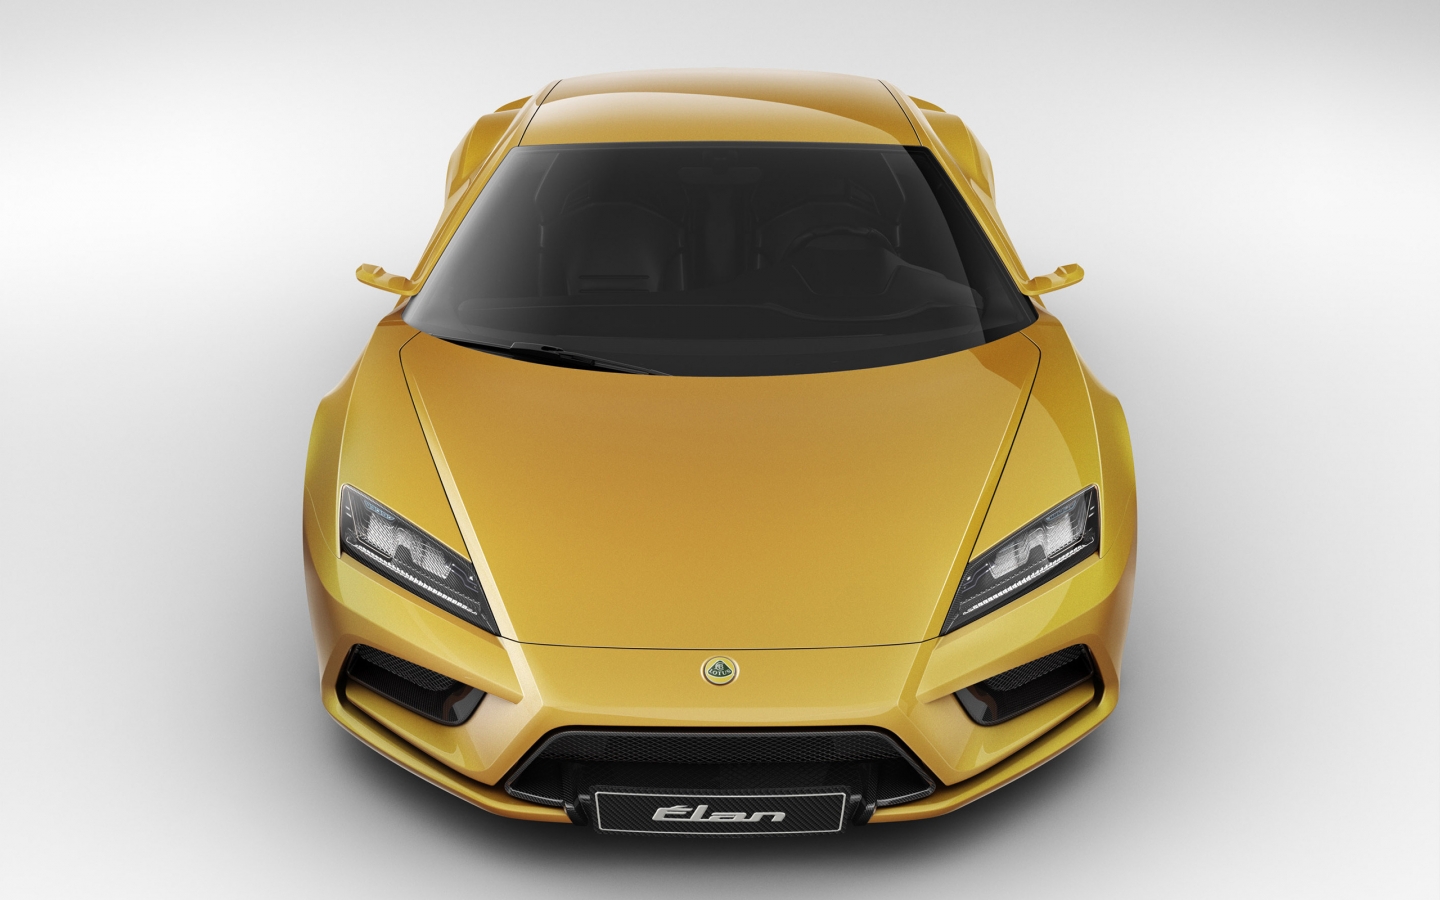 2013 Lotus Elan Studio Front for 1440 x 900 widescreen resolution